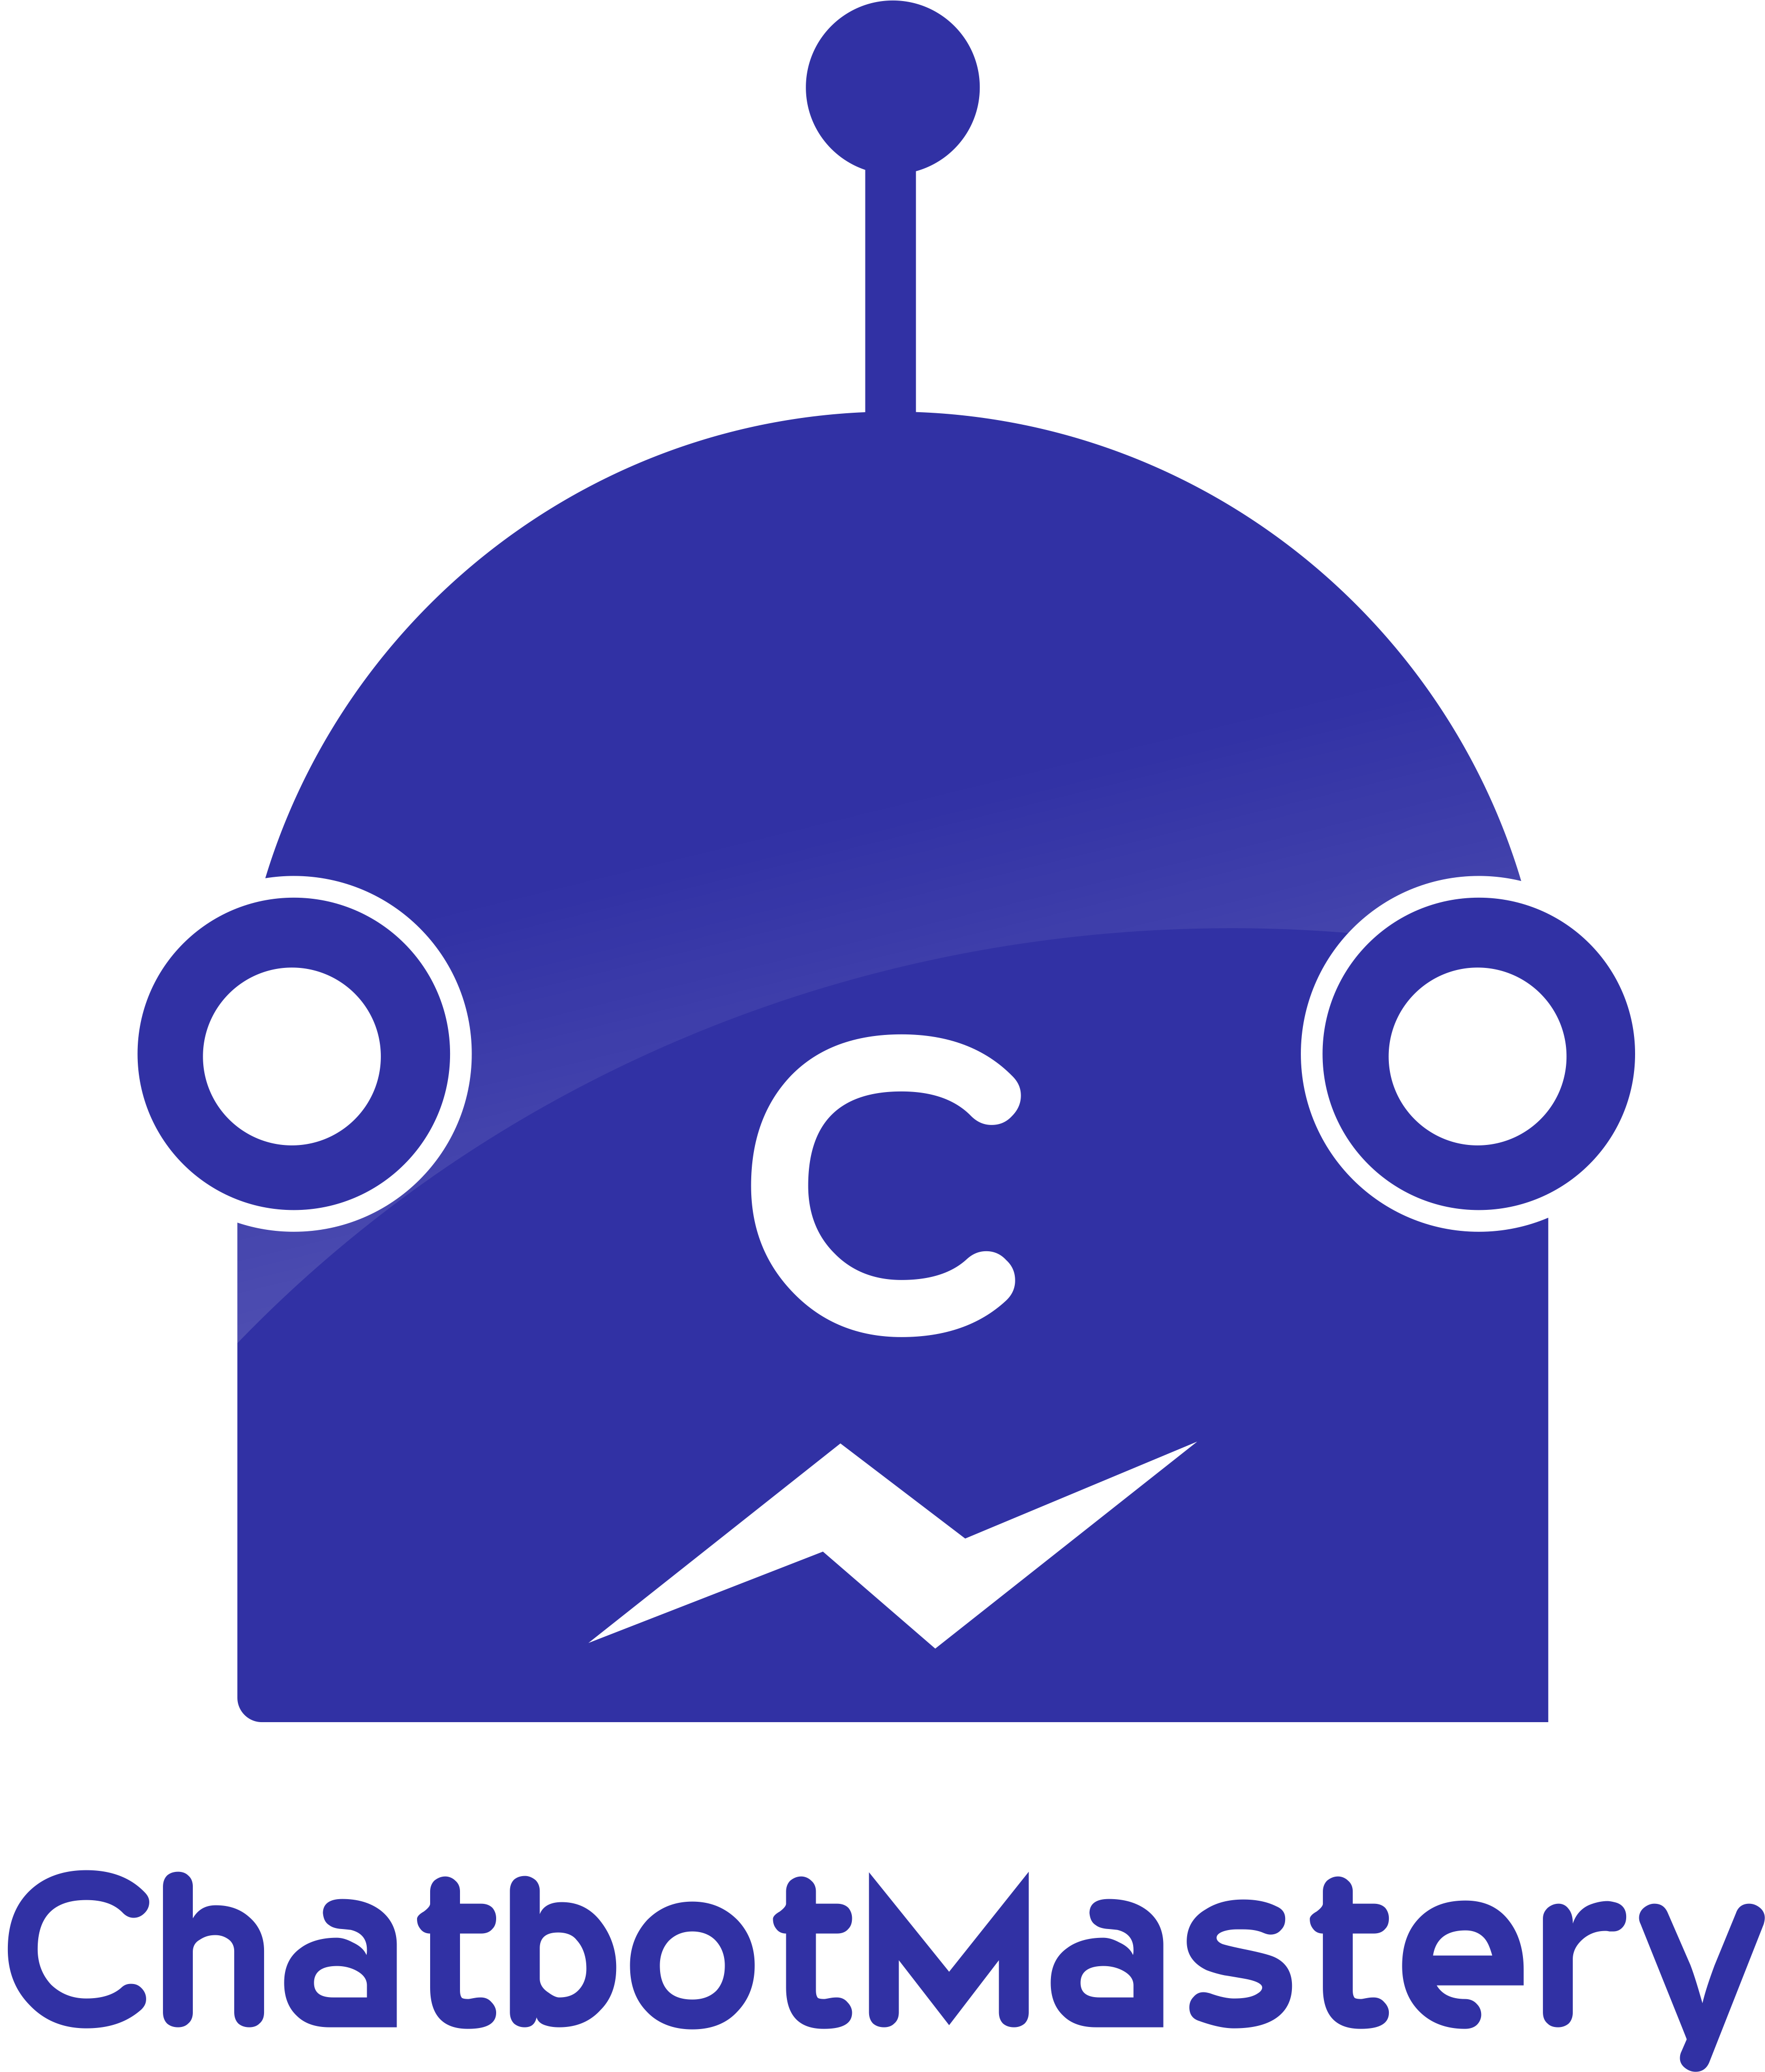 Chatbot Mastery, a chatbot developer